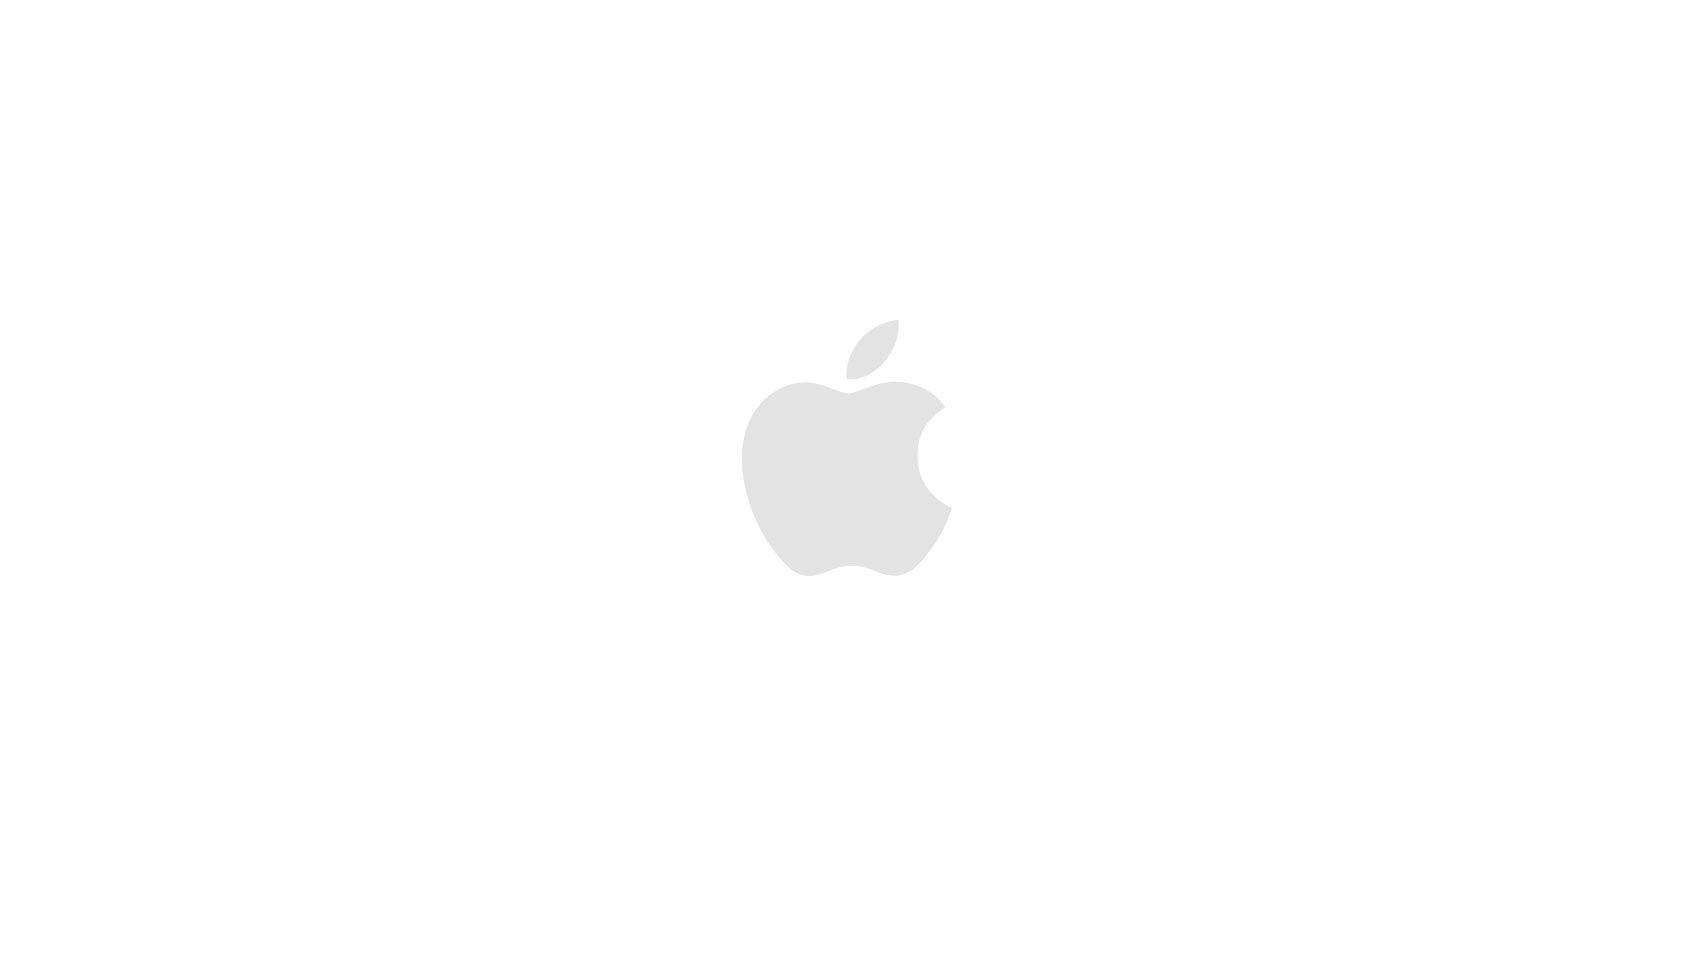 Apple.com Logo - Apple